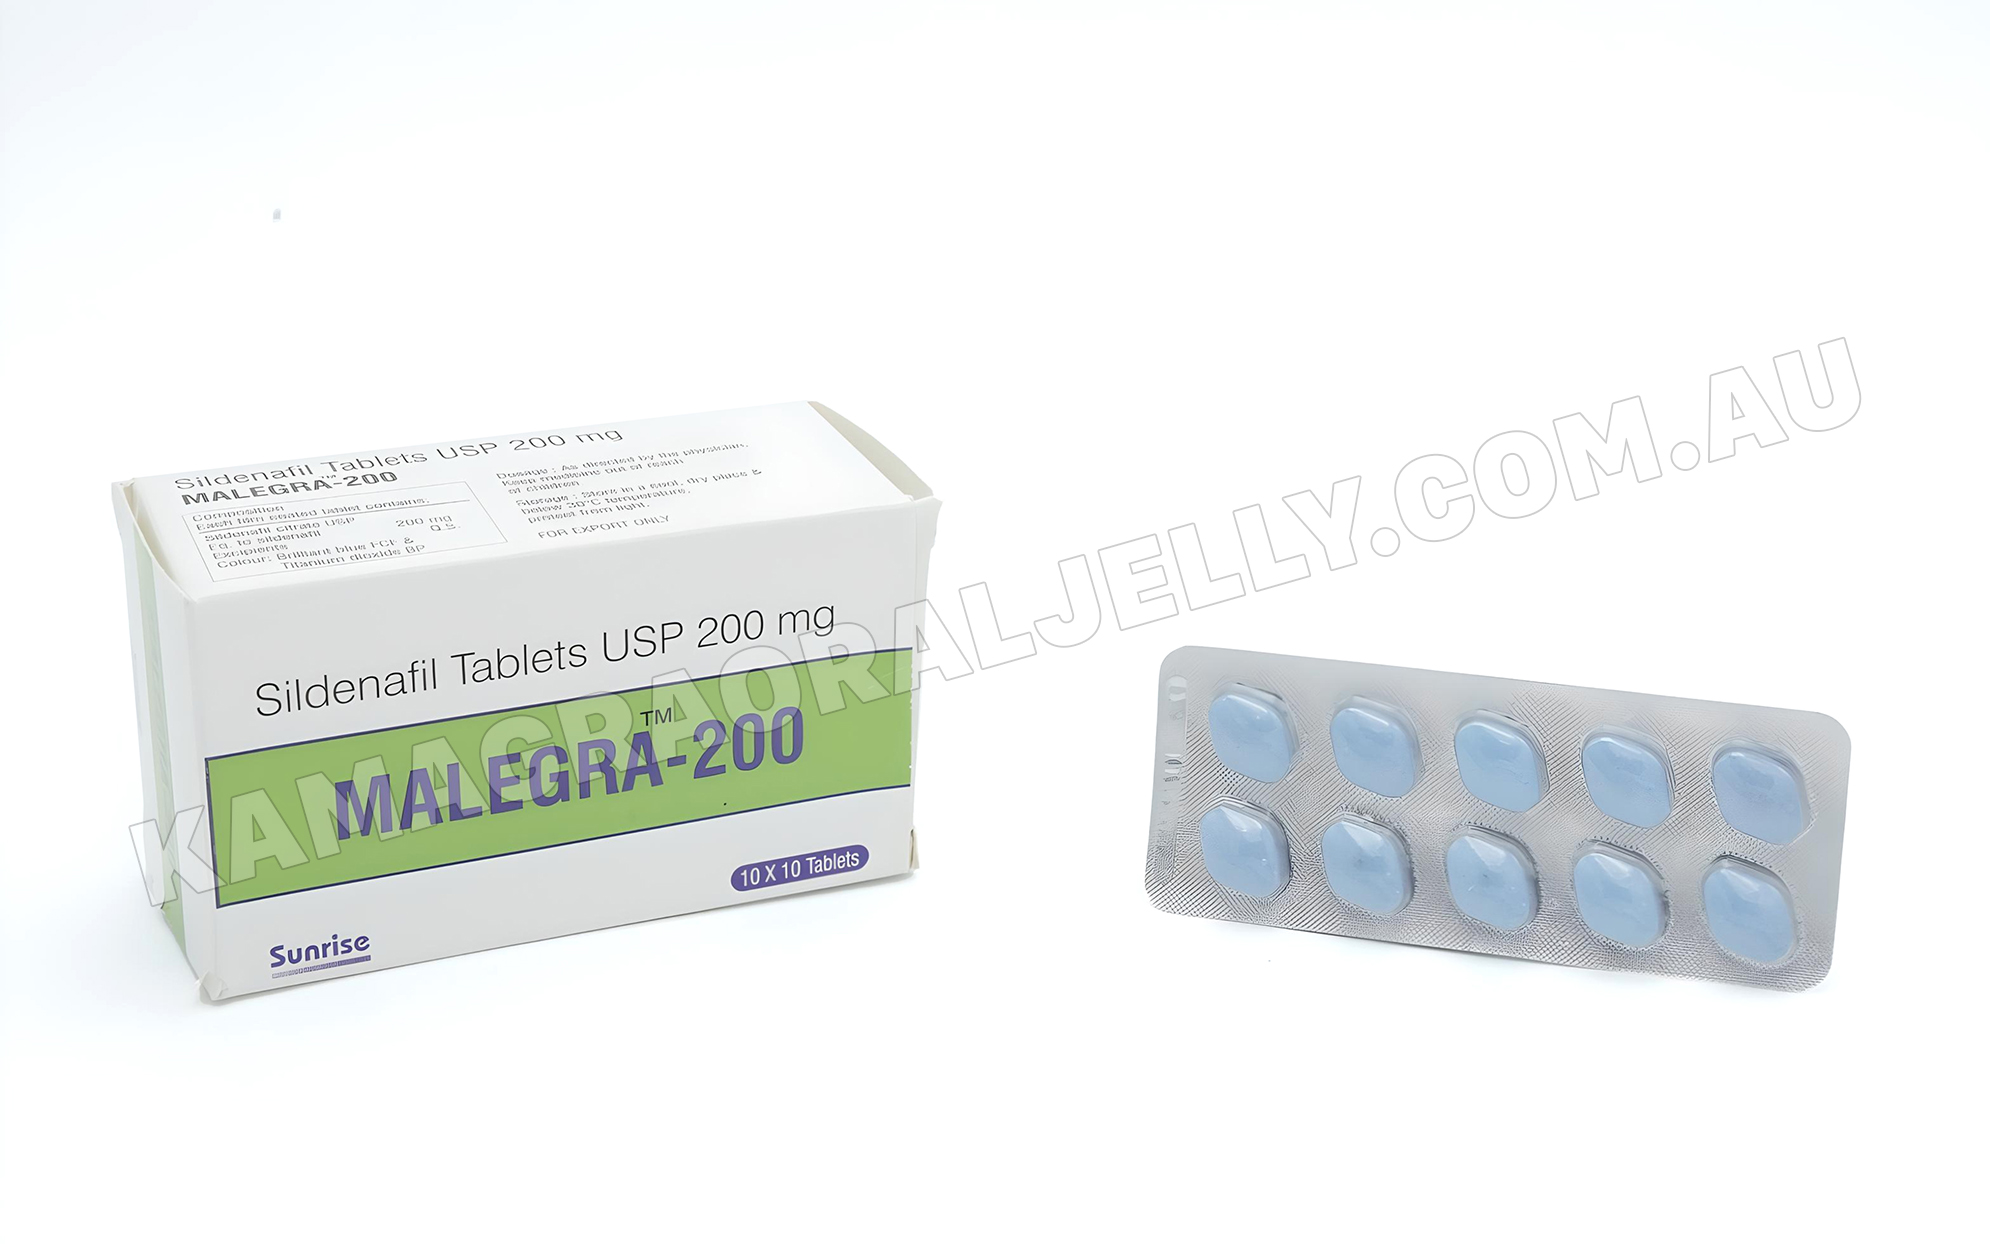 Usage Guidelines of Malegra 200 mg